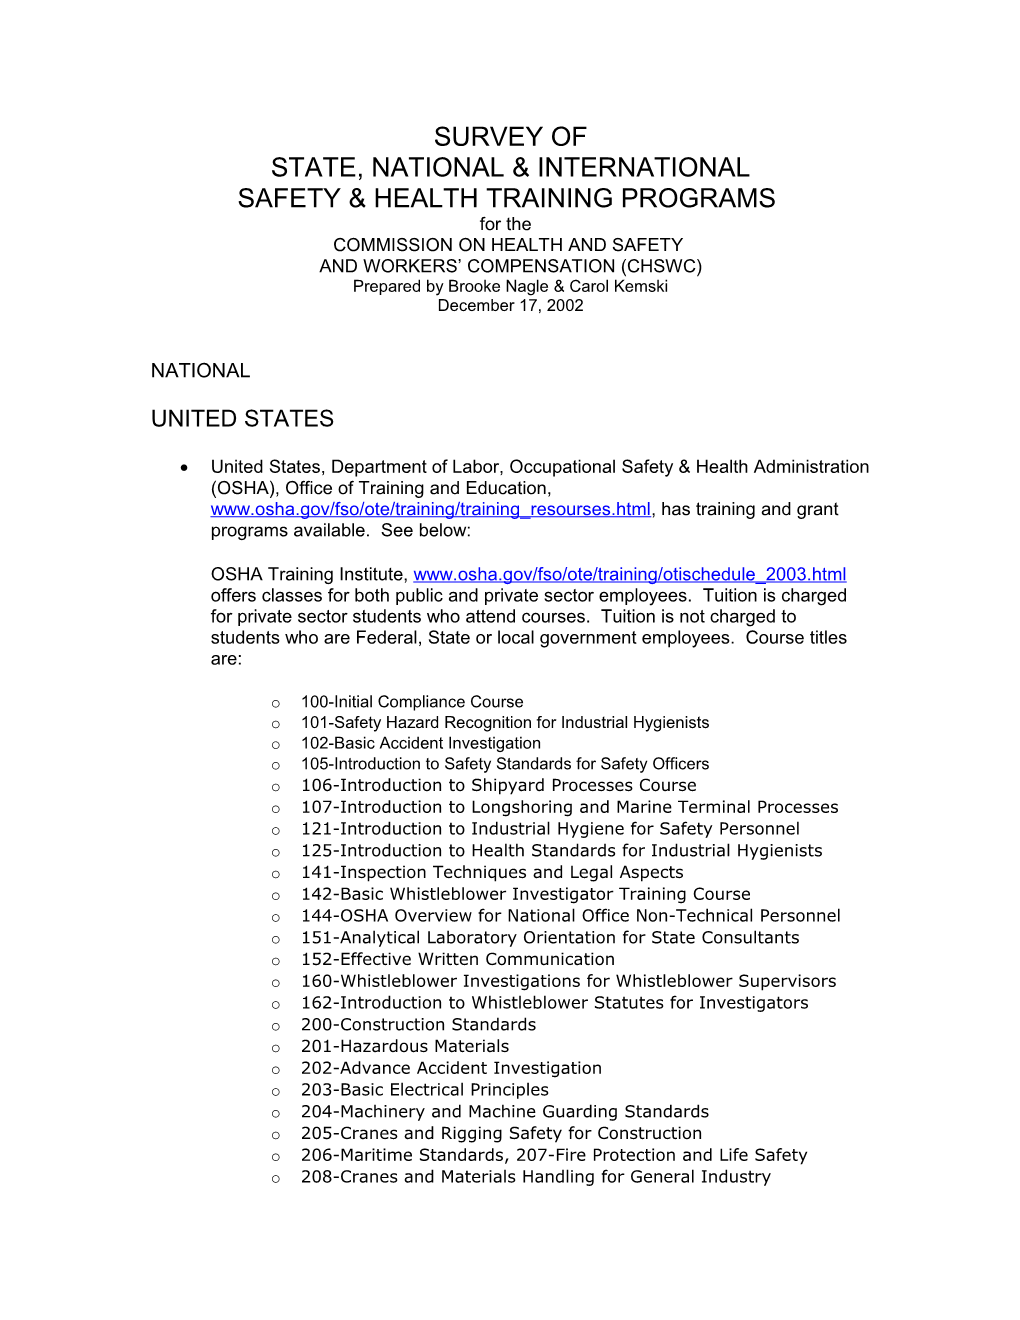 Safety & Health Training Programs